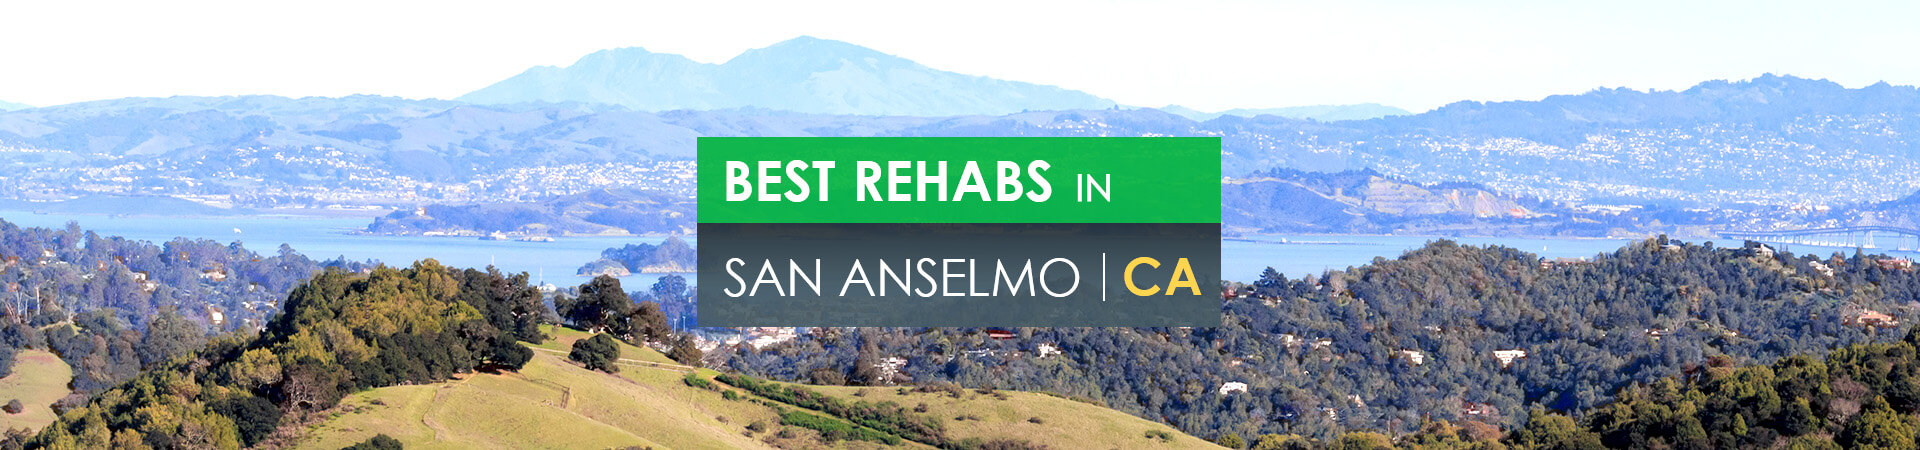 Best rehabs in San Anselmo, CA